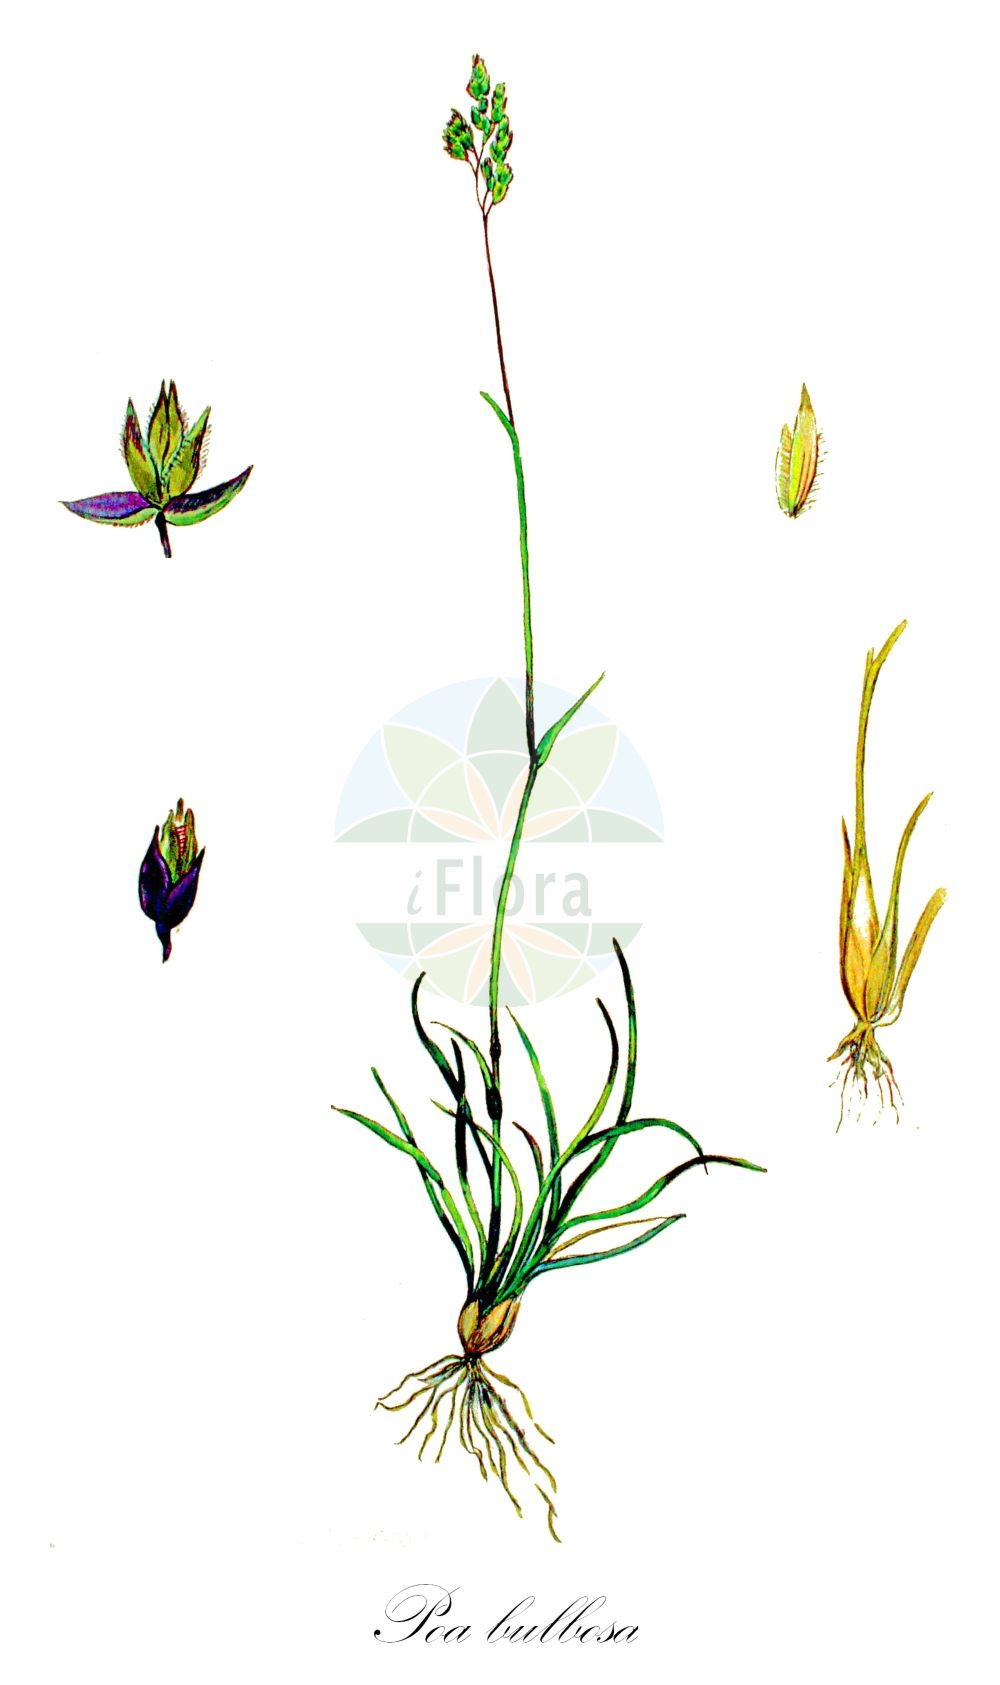 Historische Abbildung von Poa bulbosa (Zwiebel-Rispengras - Bulbous Meadow-grass). Das Bild zeigt Blatt, Bluete, Frucht und Same. ---- Historical Drawing of Poa bulbosa (Zwiebel-Rispengras - Bulbous Meadow-grass). The image is showing leaf, flower, fruit and seed.(Poa bulbosa,Zwiebel-Rispengras,Bulbous Meadow-grass,Poa crispa,Poa bulbosa,Zwiebel-Rispengras,Bulbous Meadow-grass,Bulbous Bluegrass,Poa,Rispengras,Bluegrass,Poaceae,Süßgräser,Grass family,Blatt,Bluete,Frucht,Same,leaf,flower,fruit,seed,Kops (1800-1934))